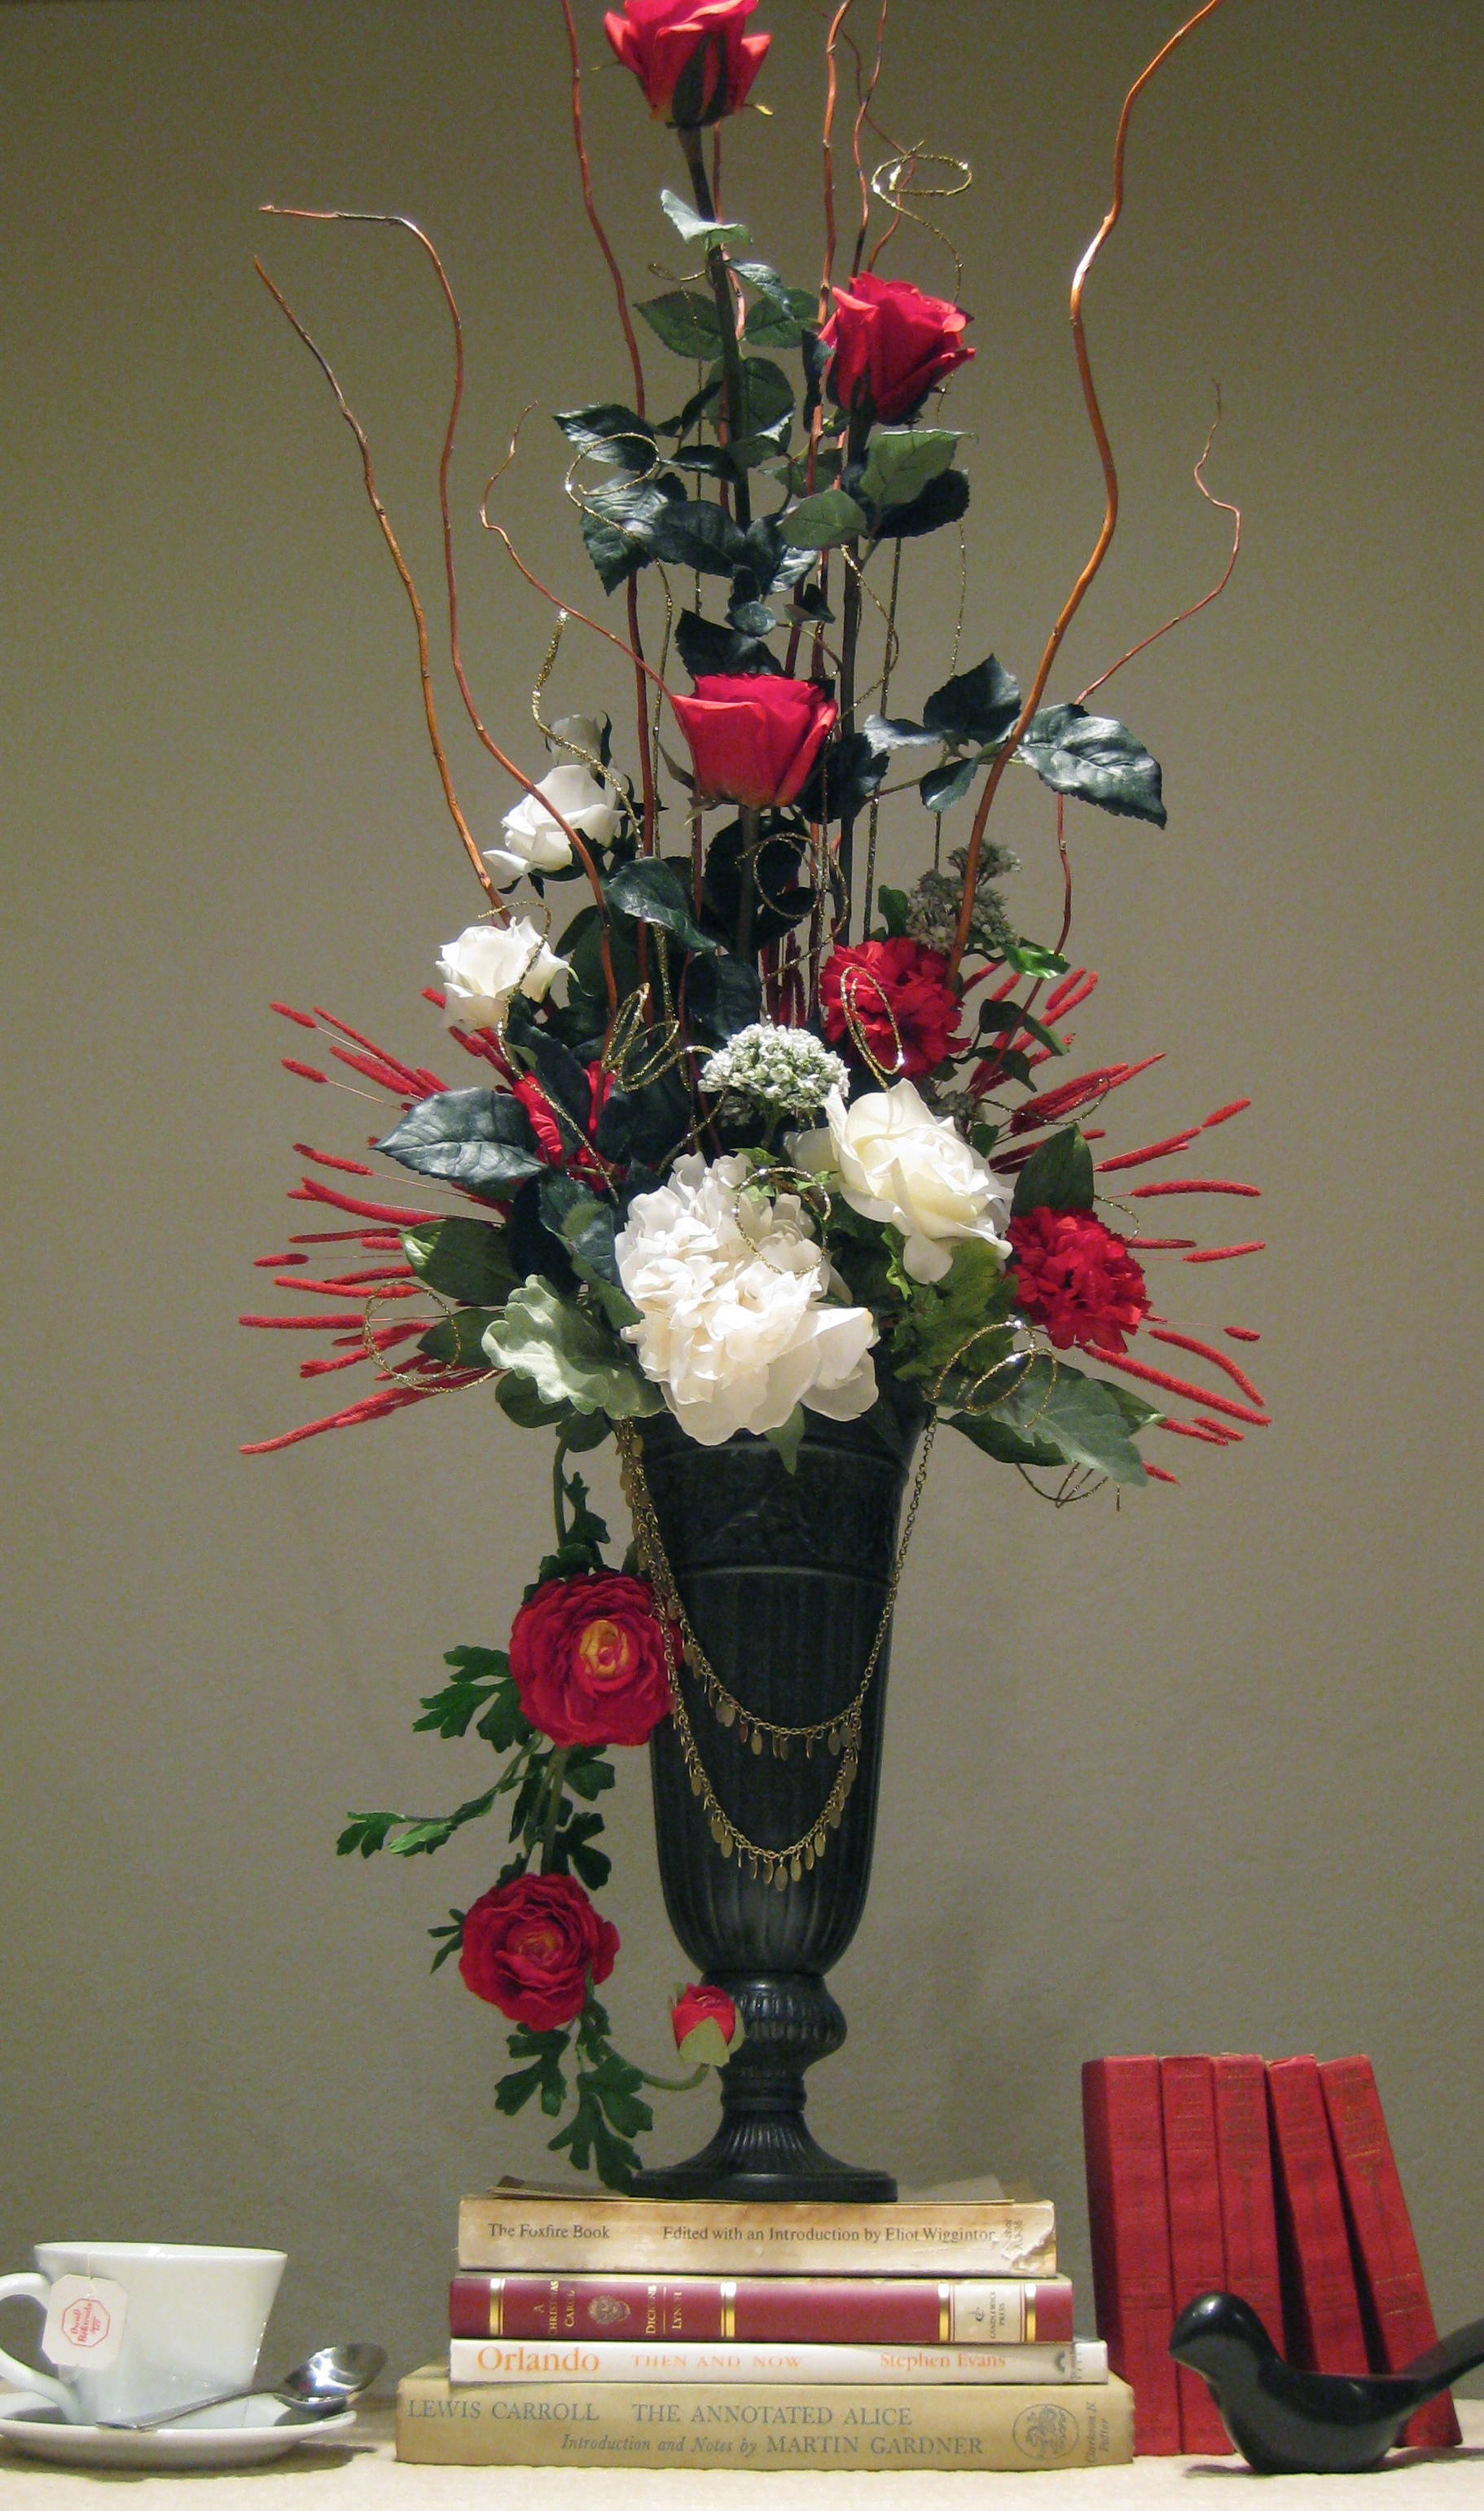 floral arrangements delivery